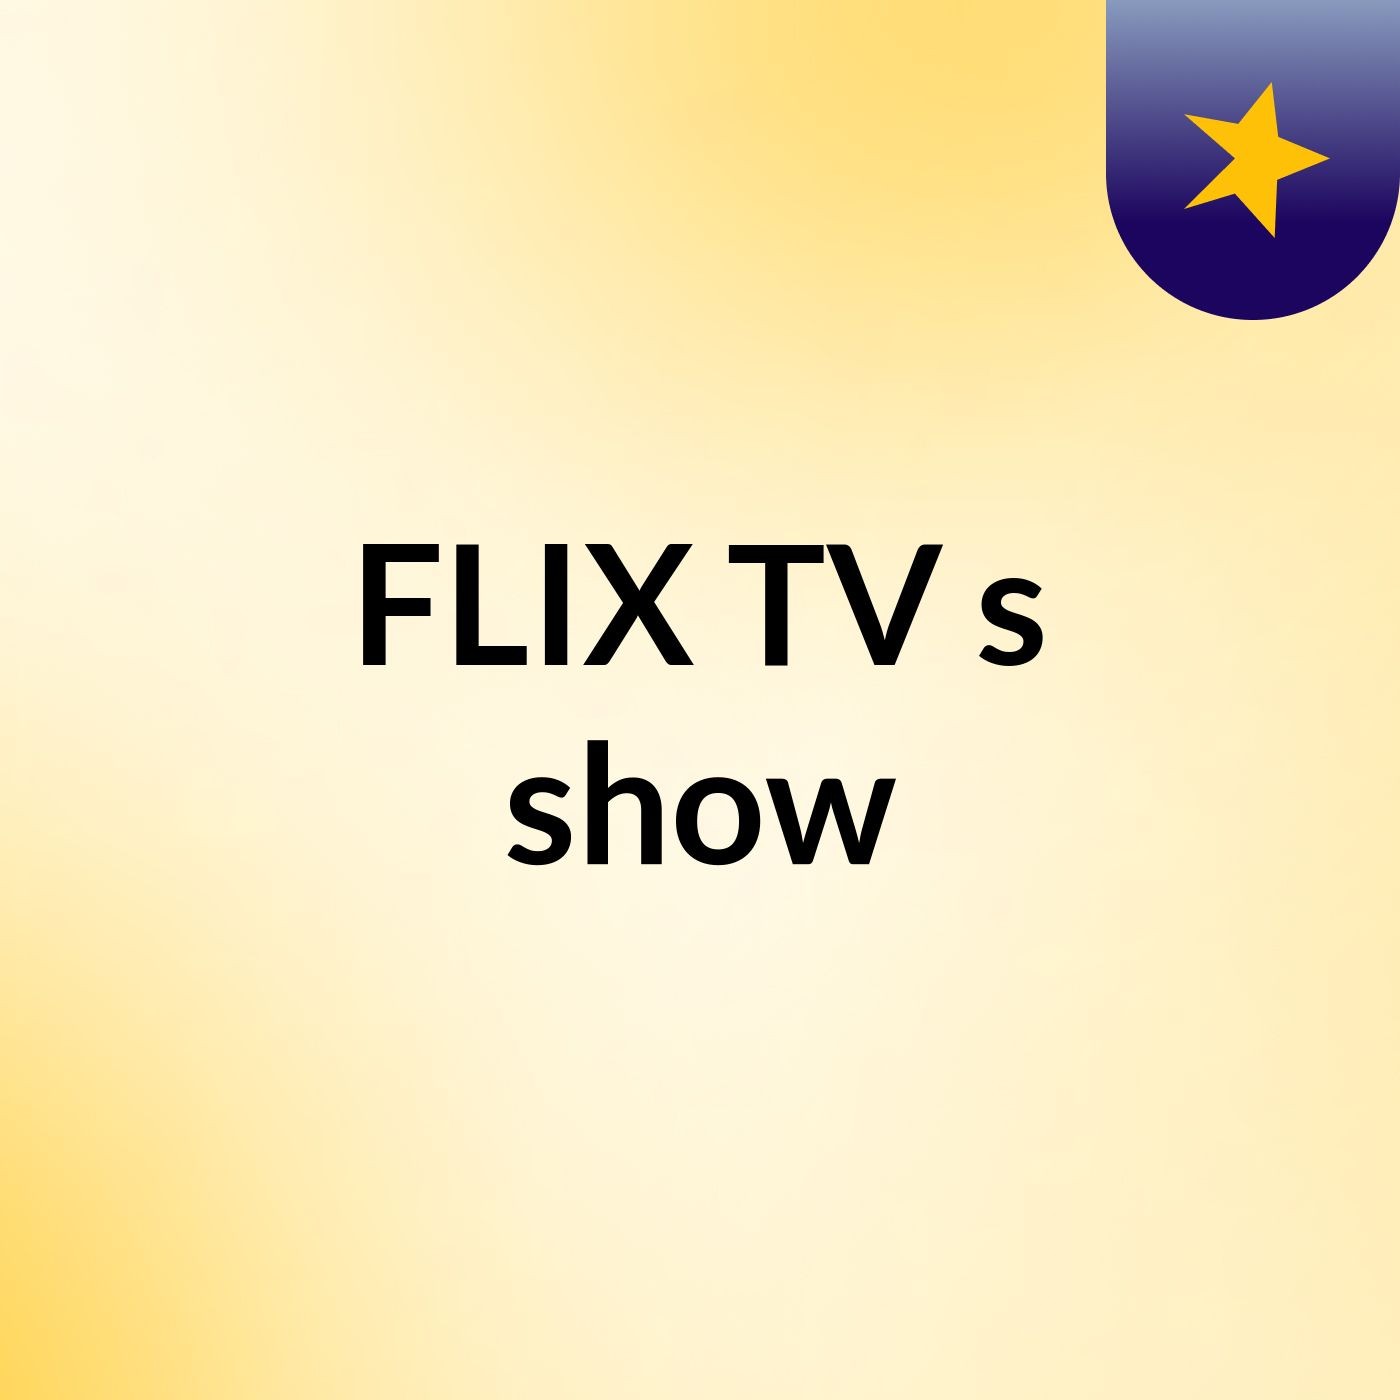 FLIX TV's show